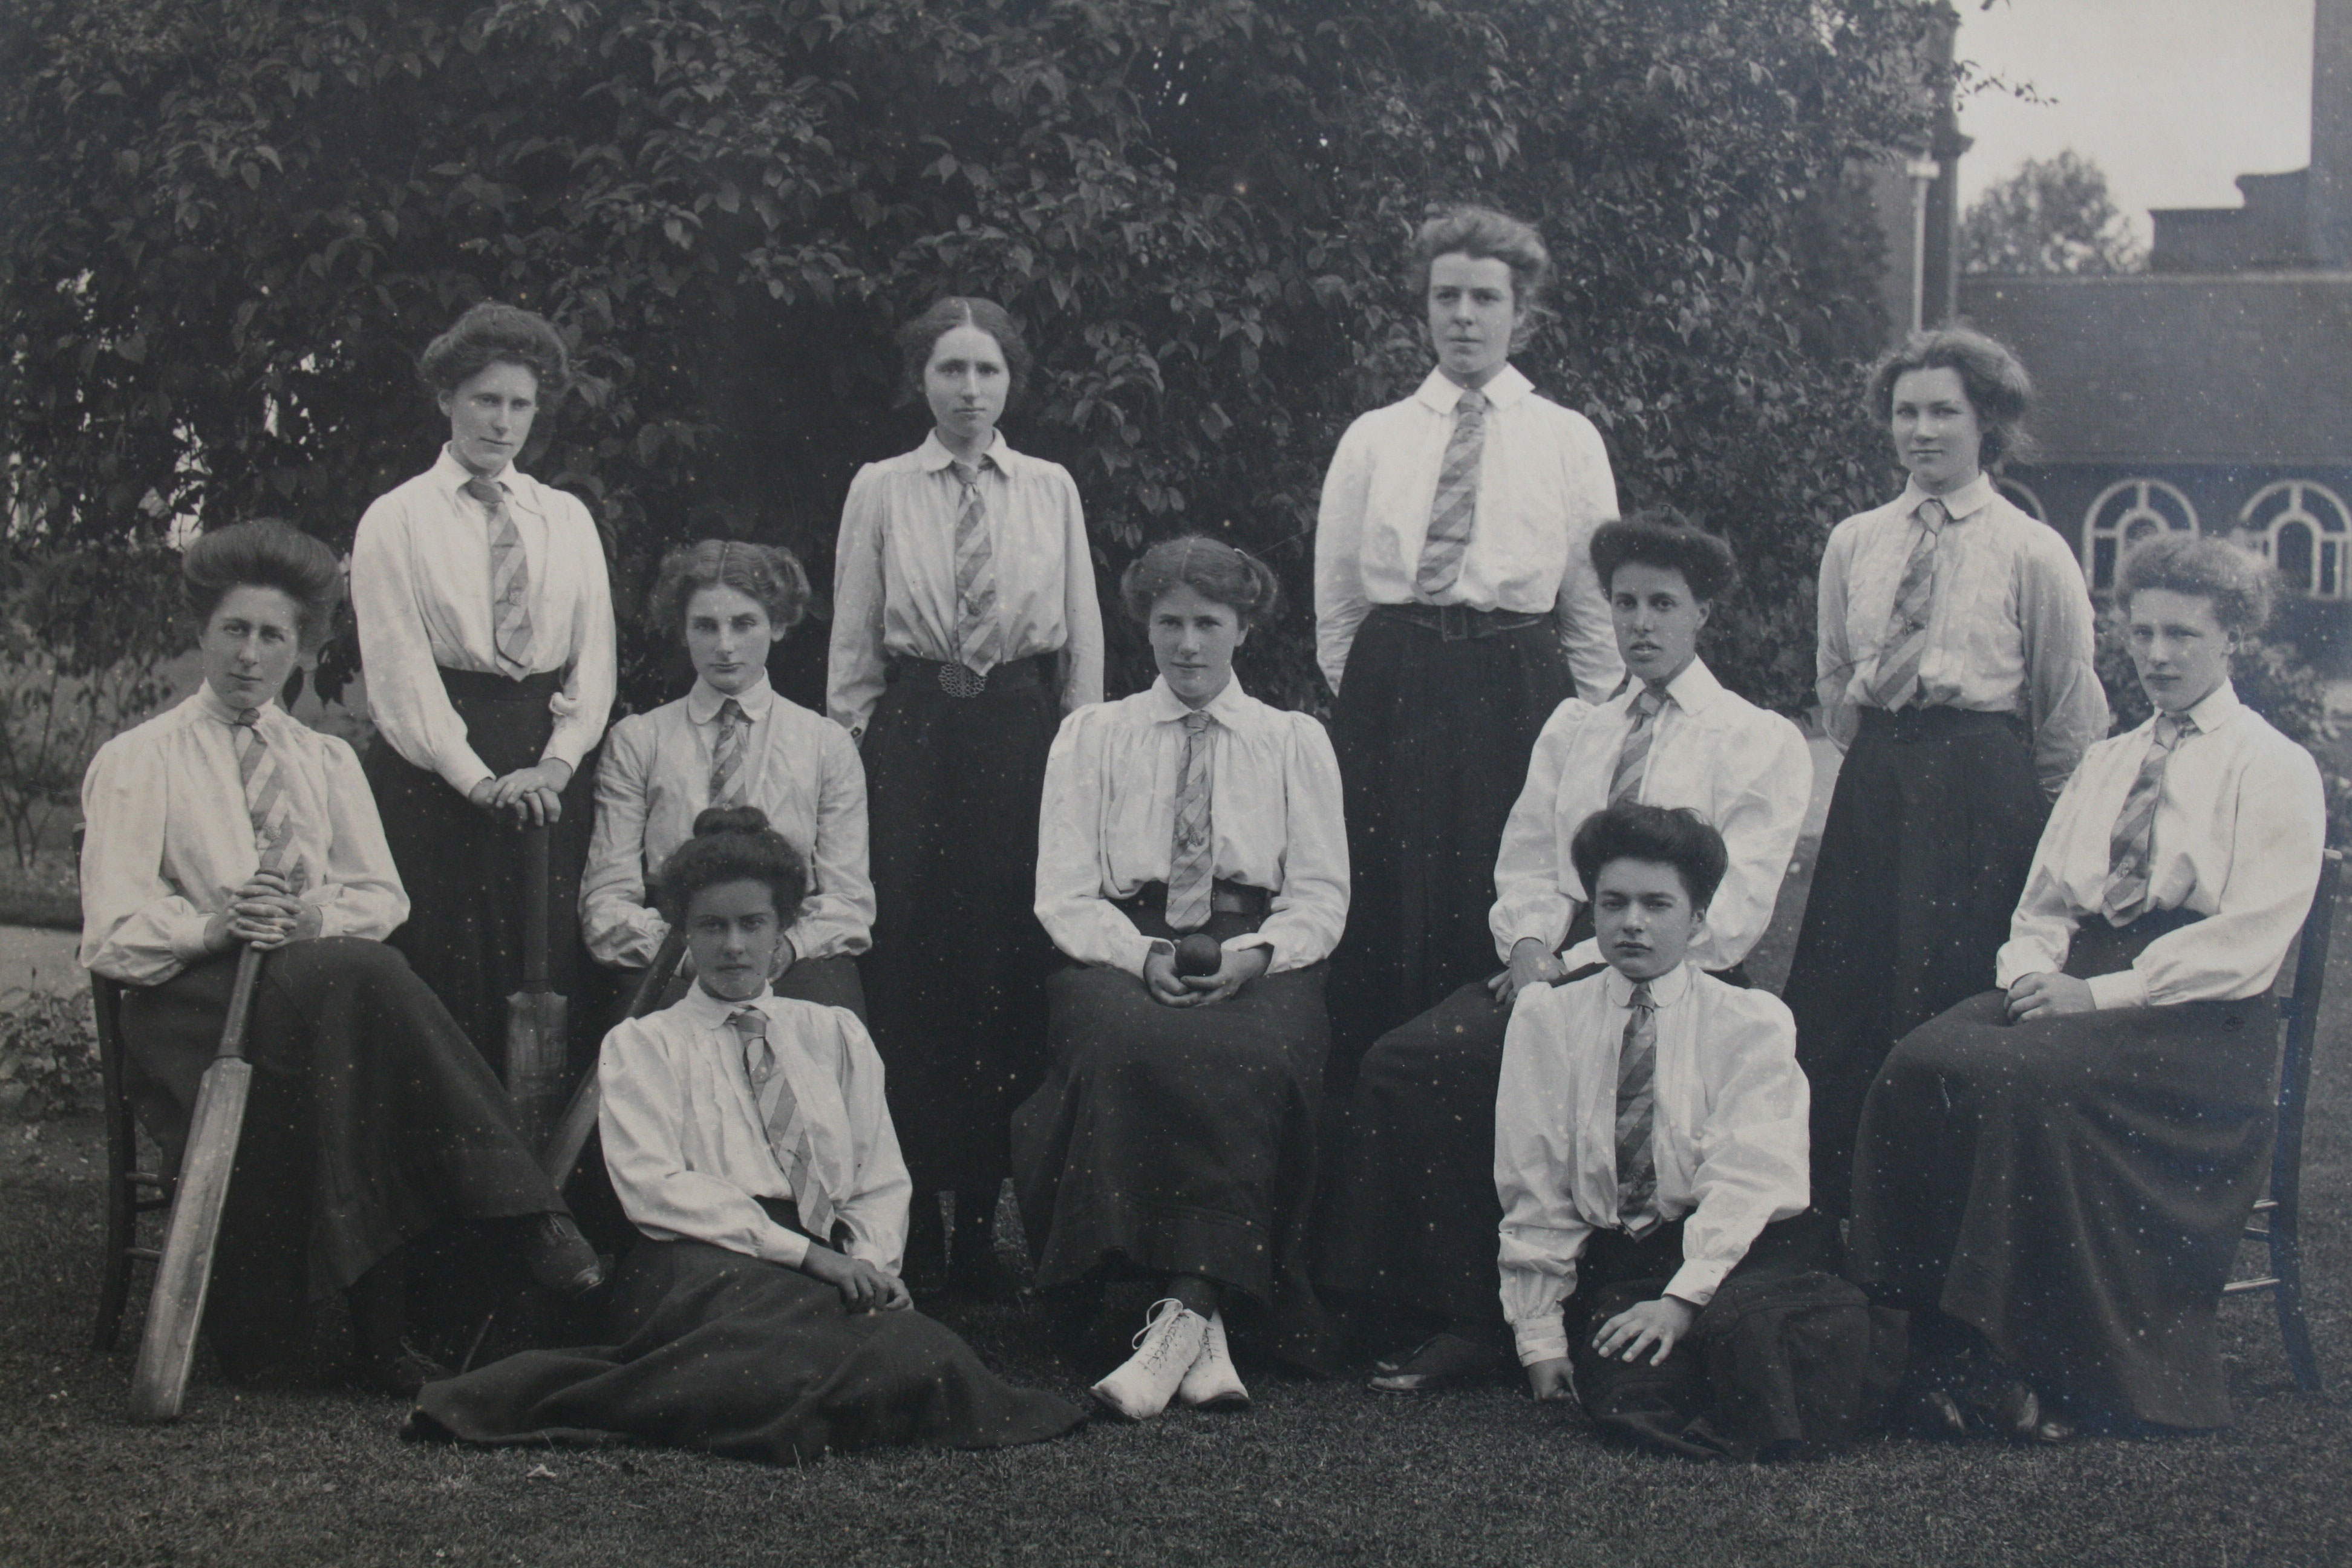 Cricket team of Newnham College Cambridge, 1908 with suffragist, Ray Strachey, centre.